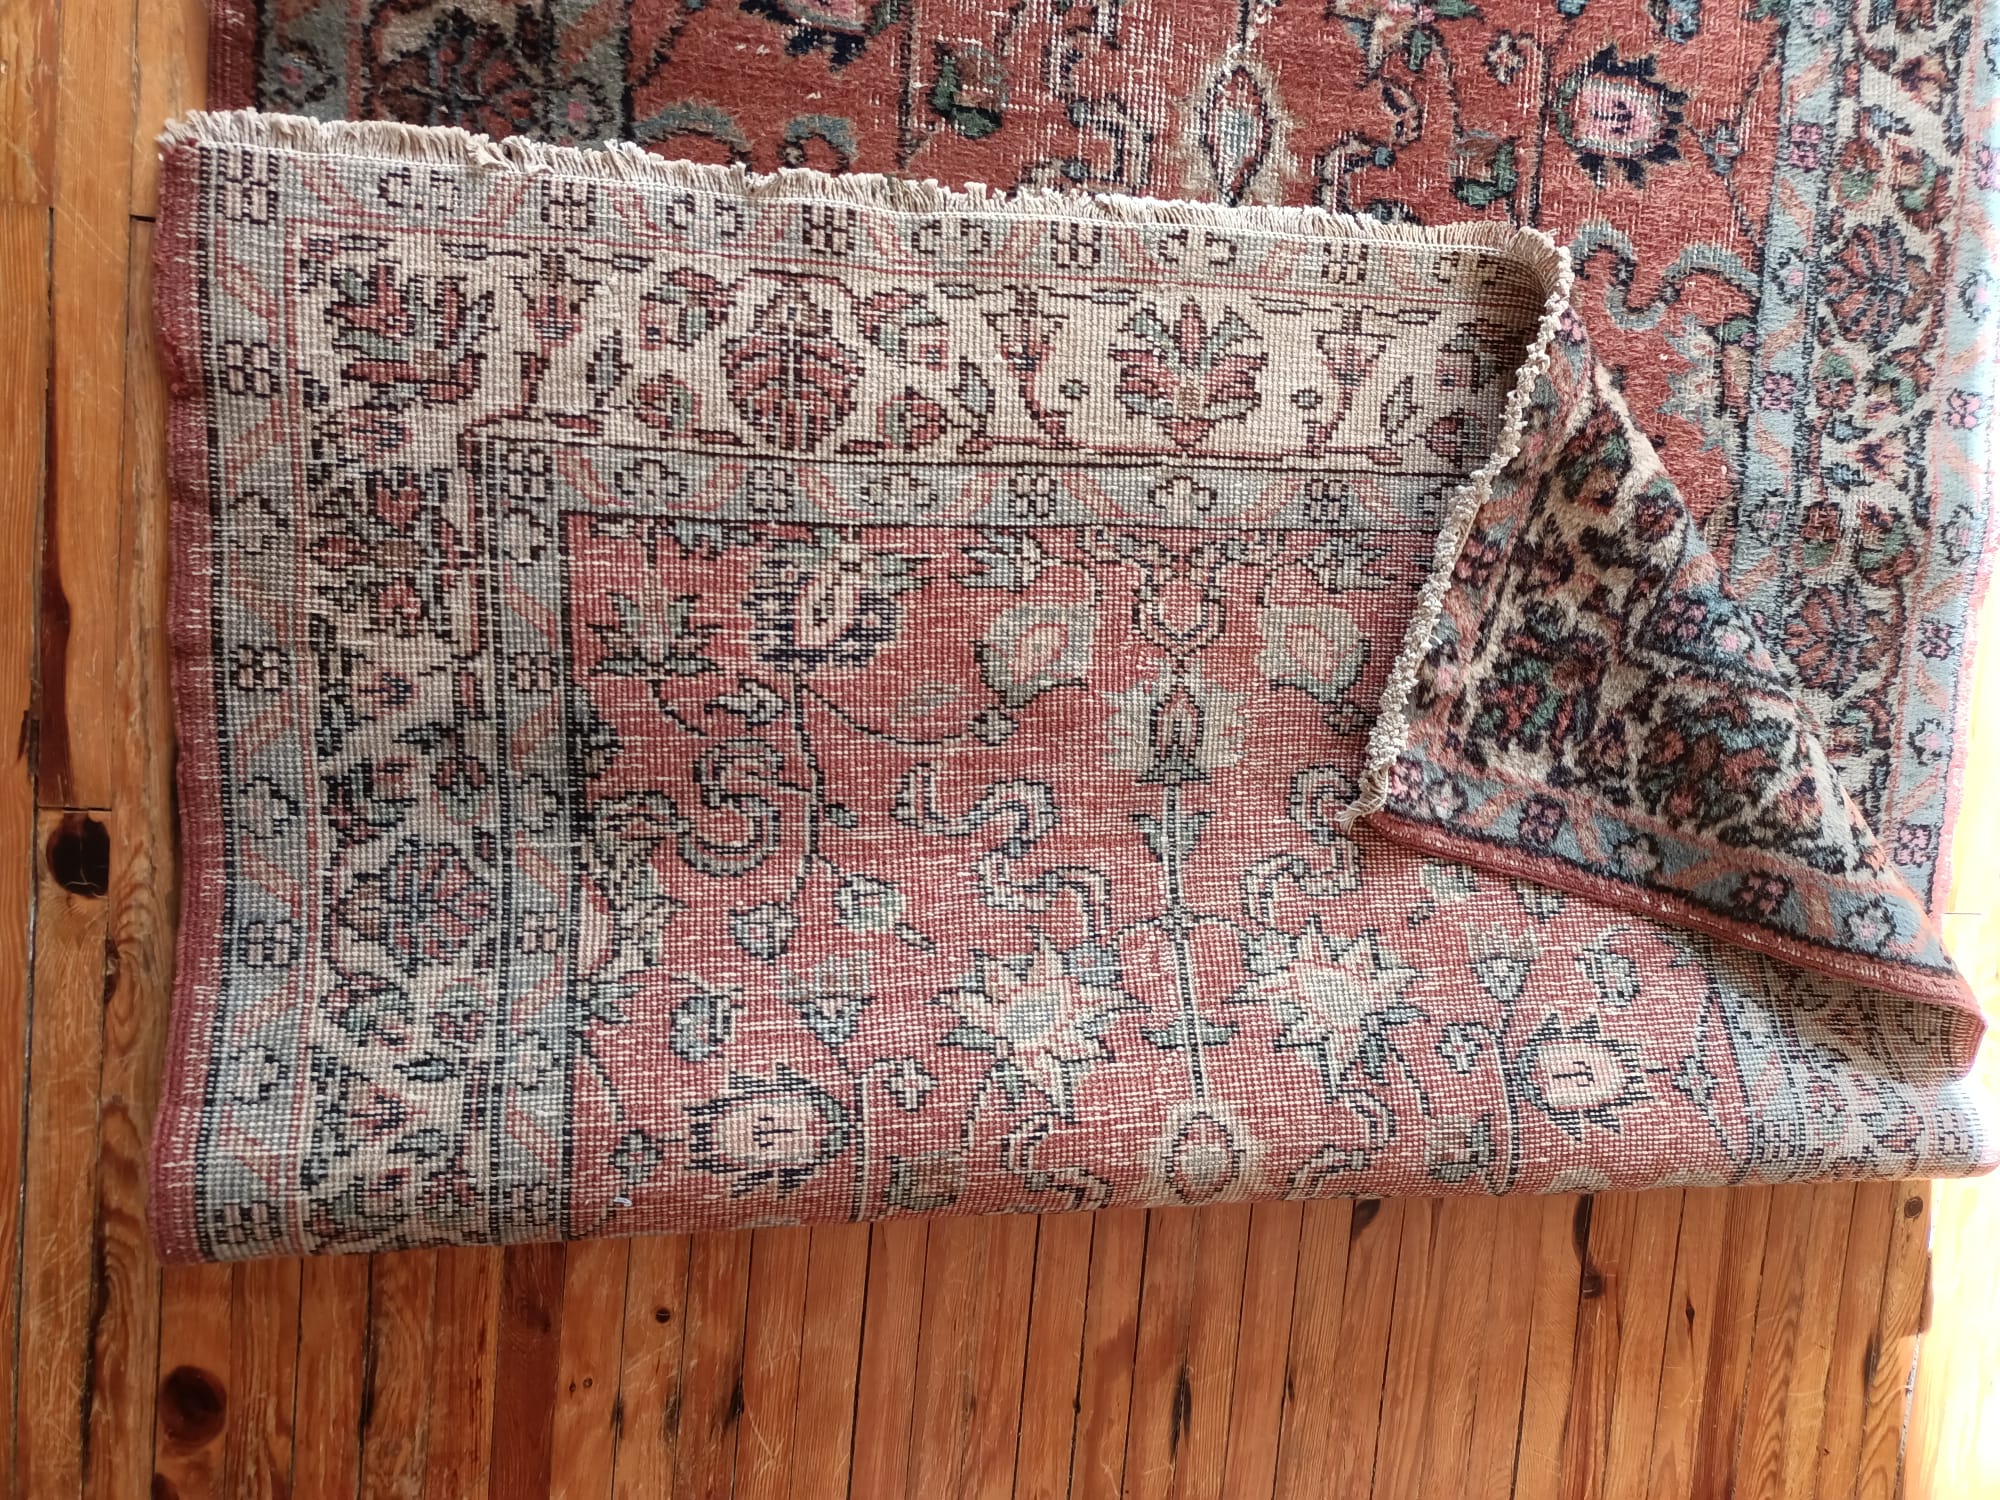 Oriental Turkish Carpet 6.6x3.8 ft